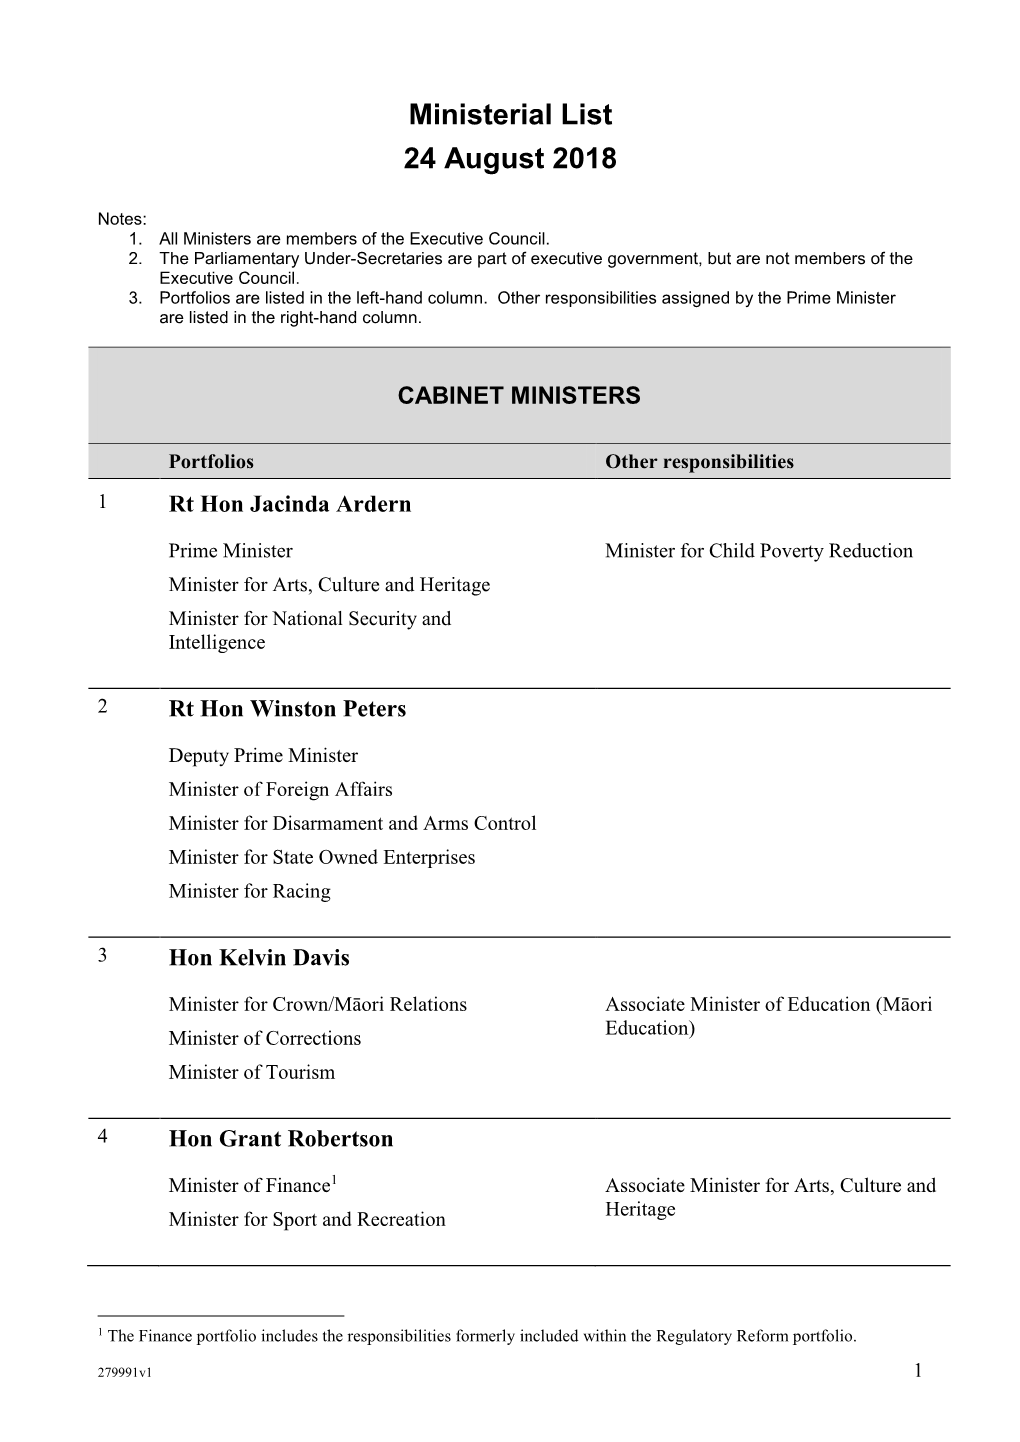 Ministerial List 24 August 2018